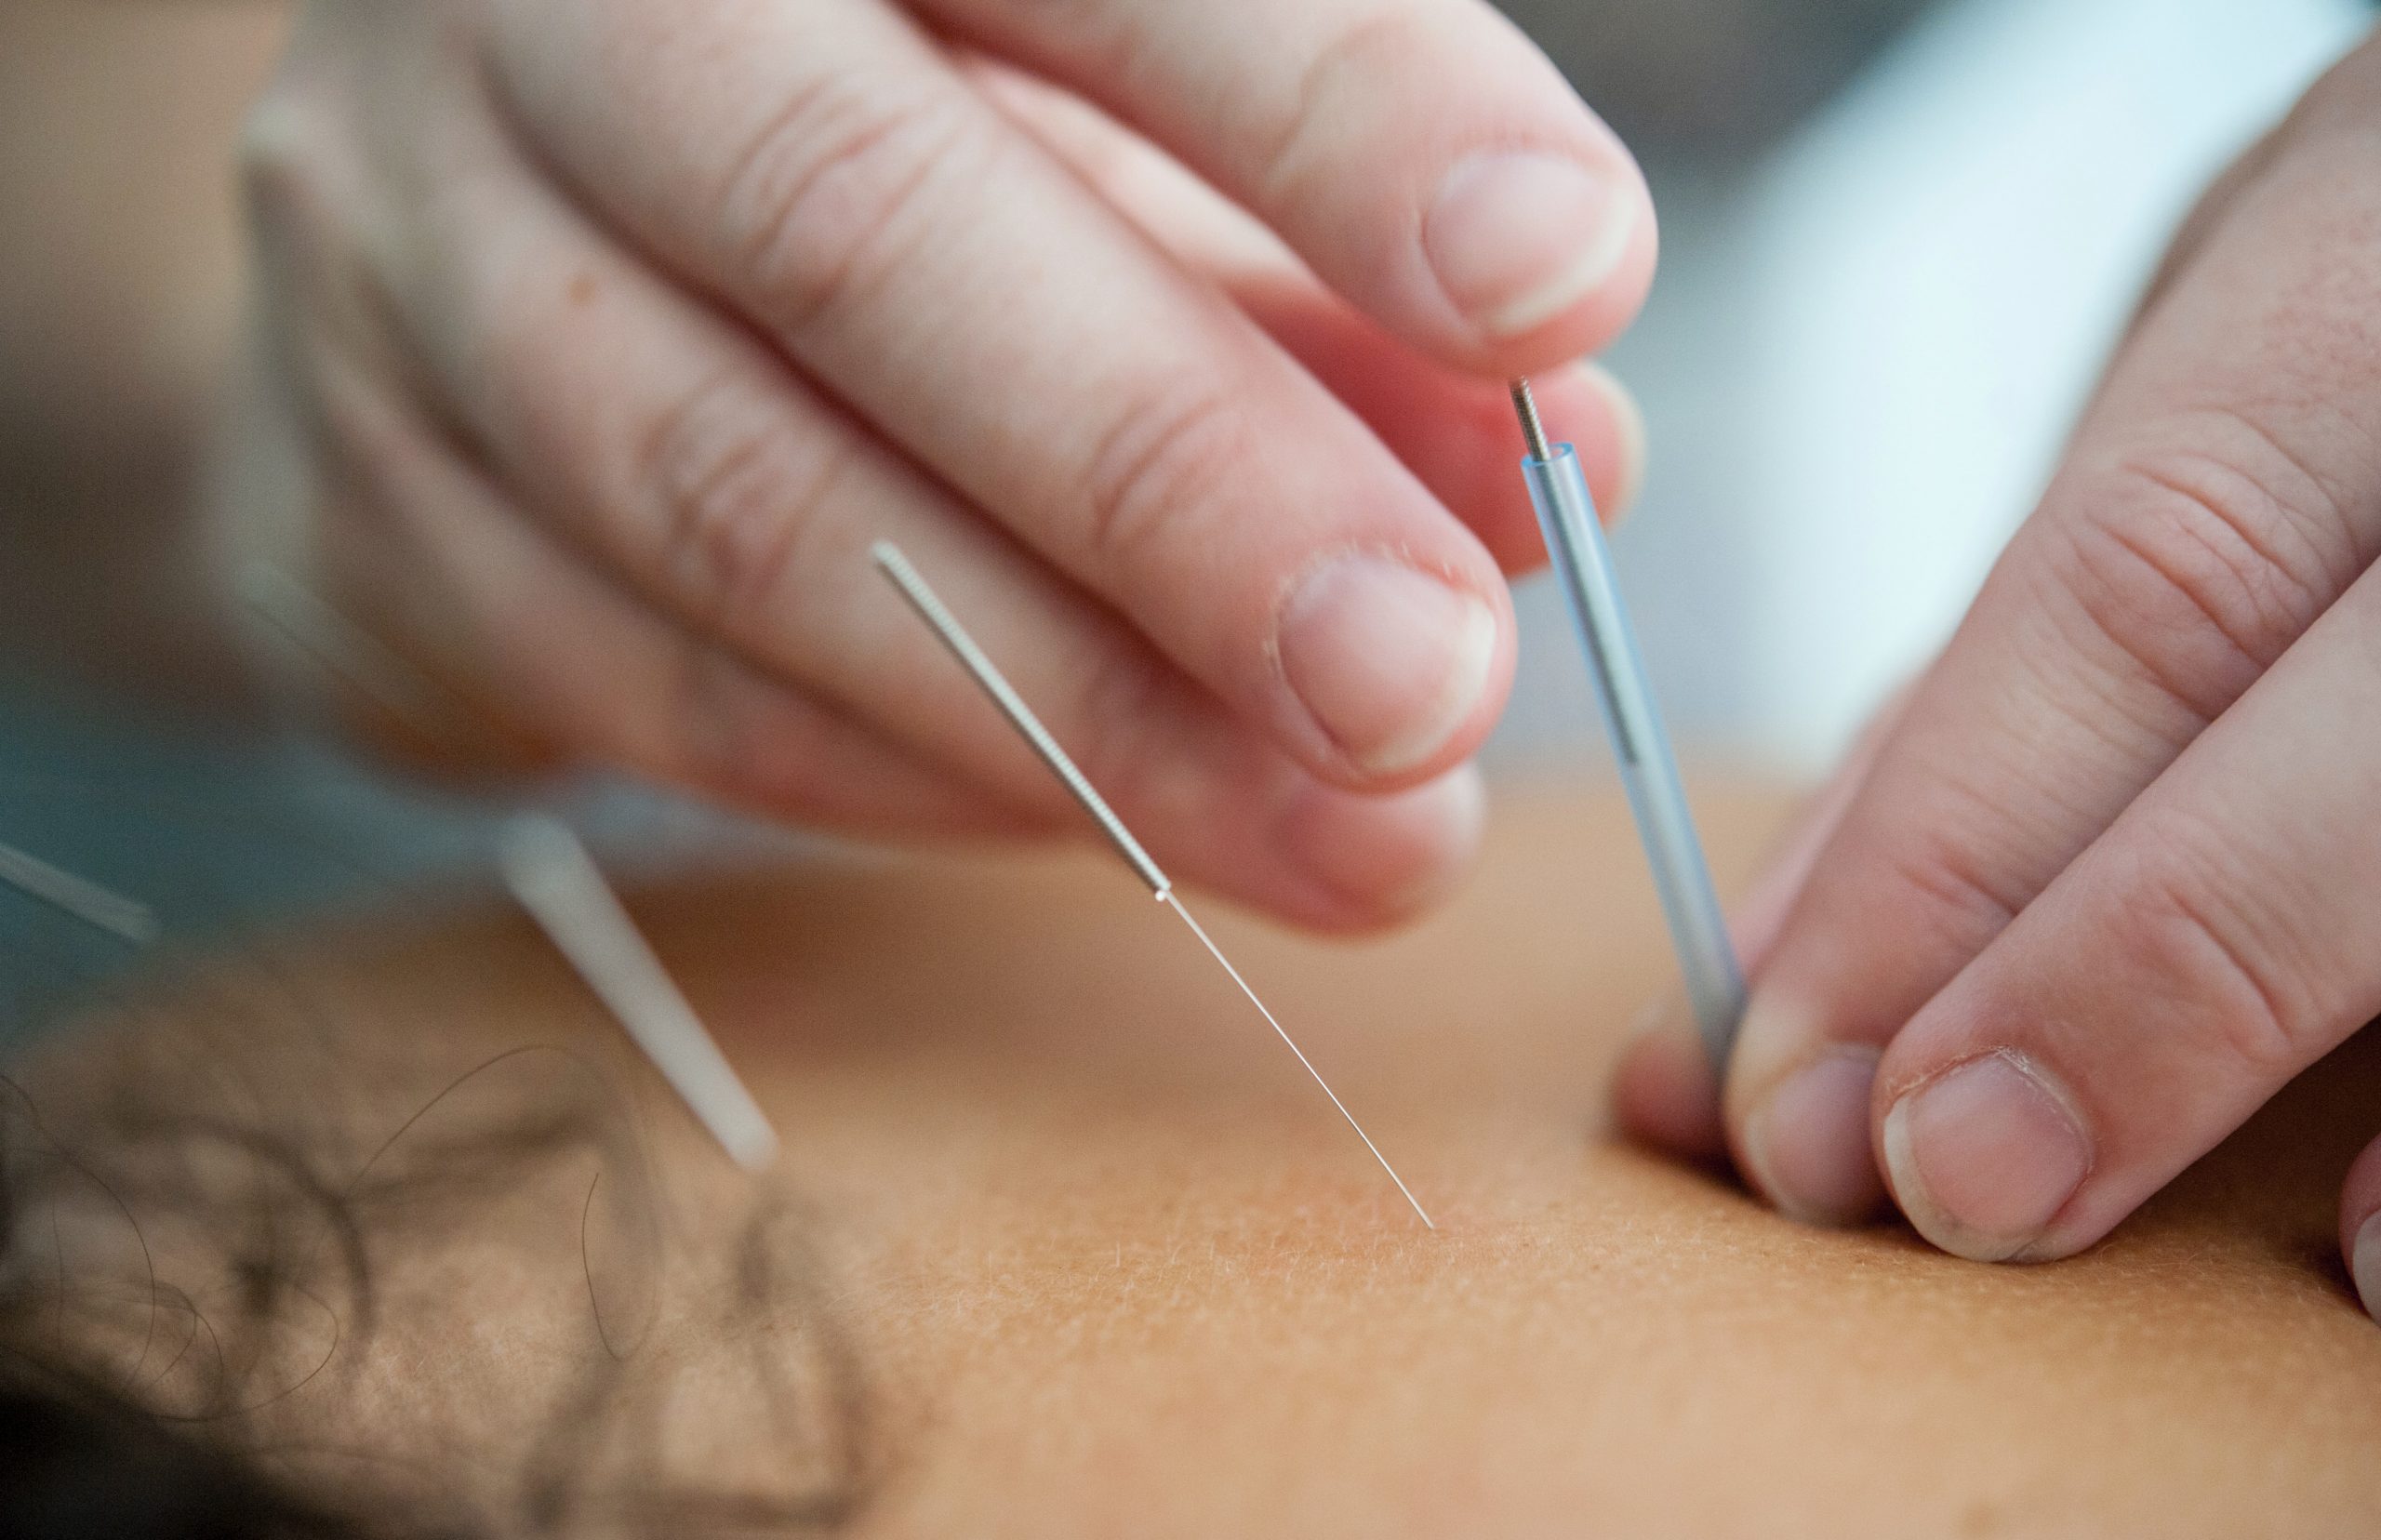 About Islington Acupuncture